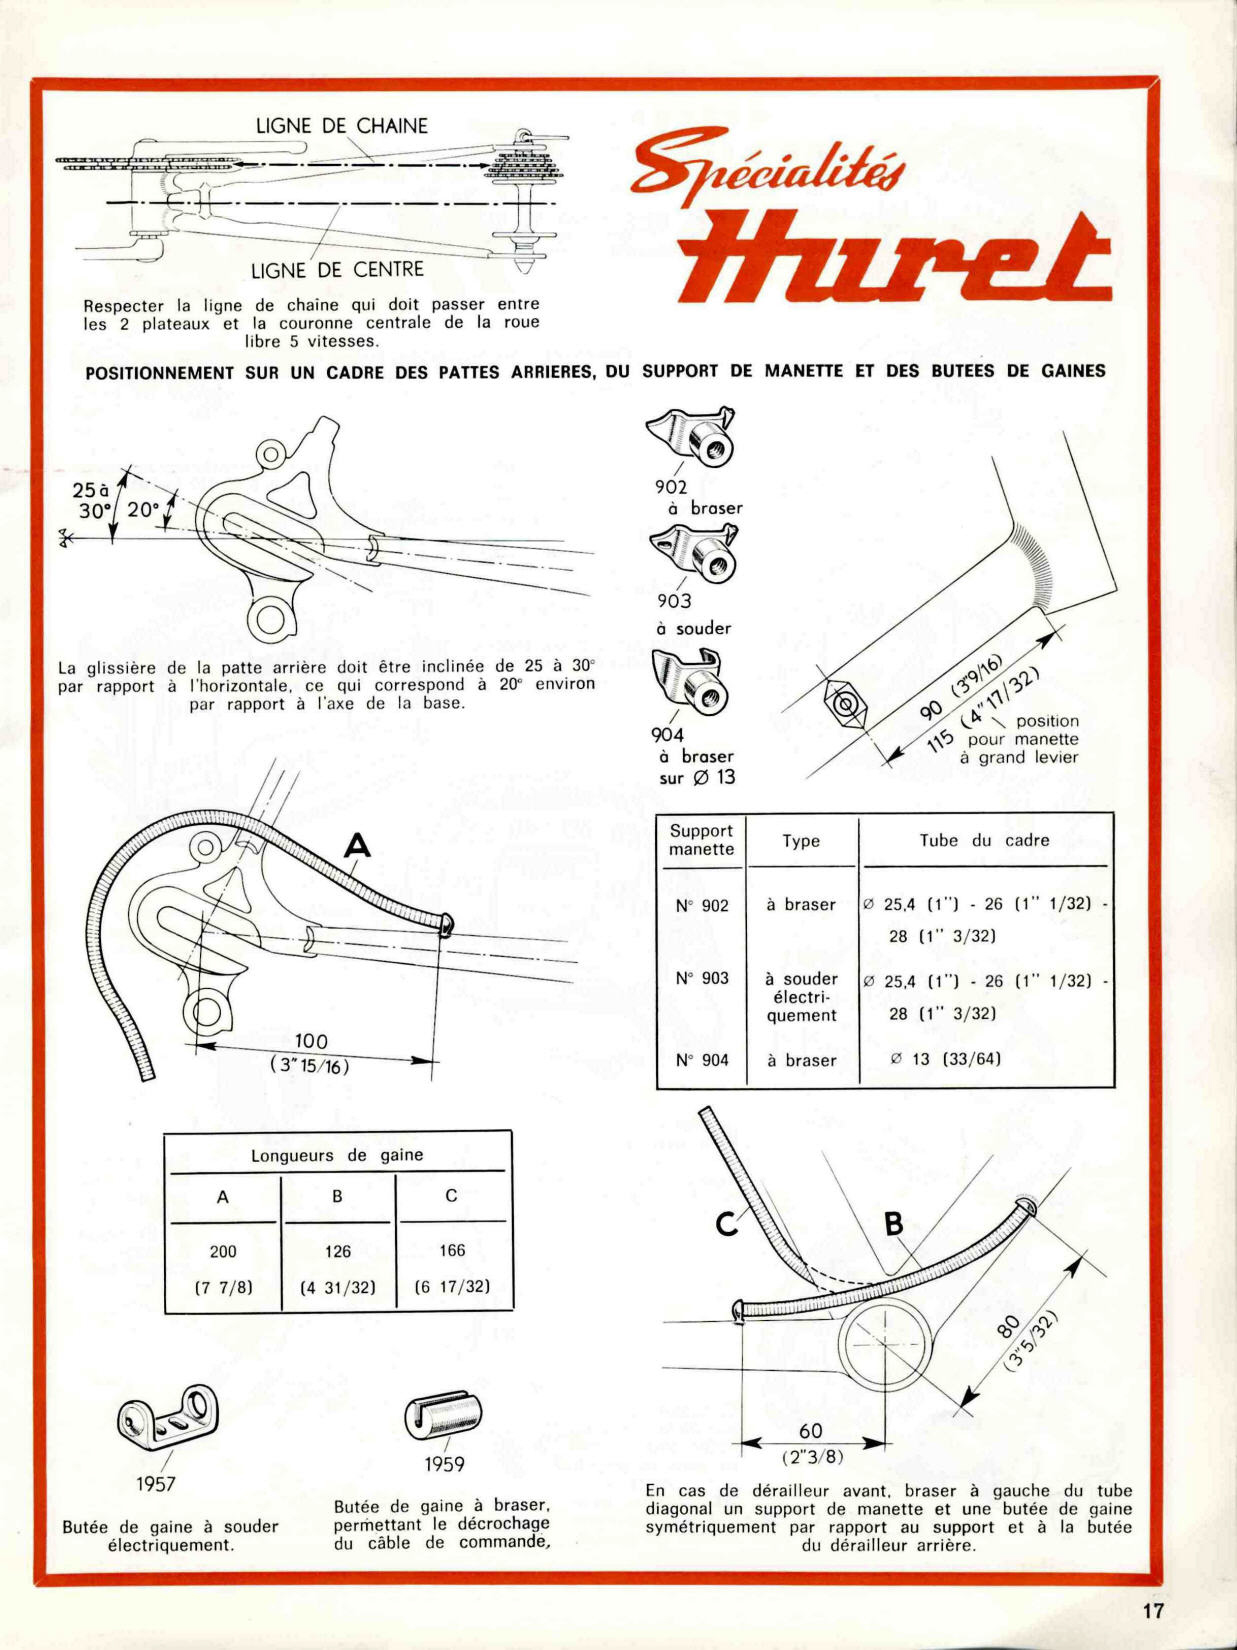 Huret catalog (1969)